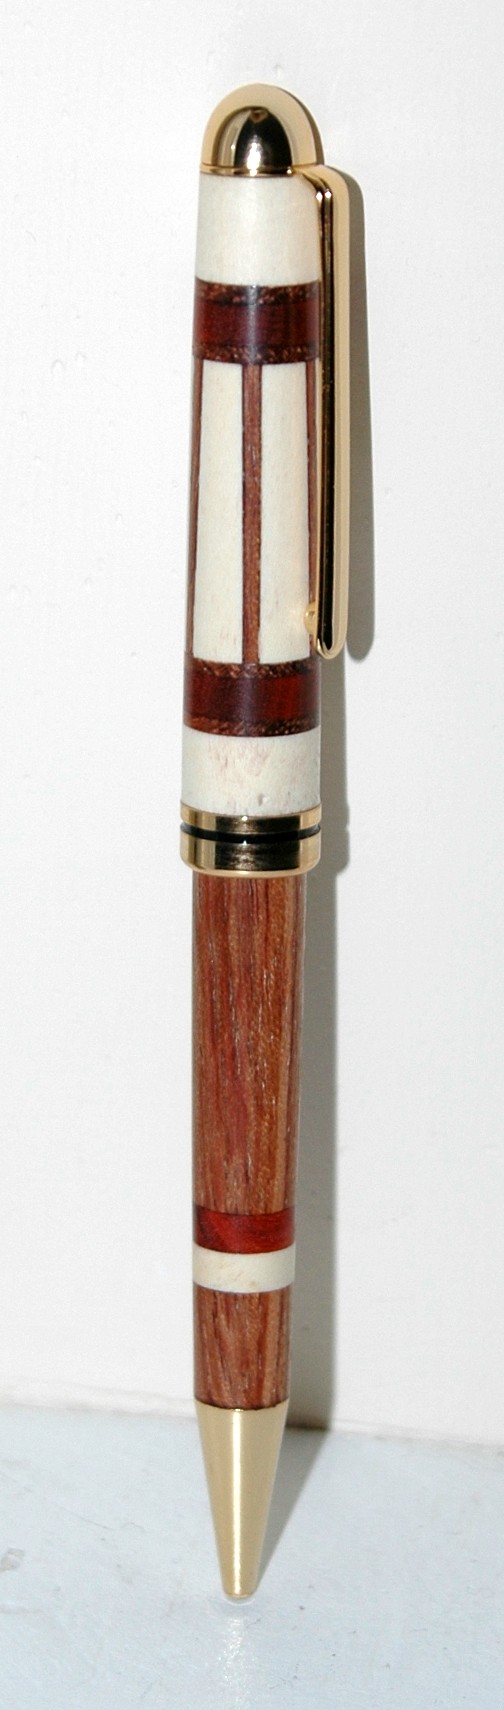 segmented pen